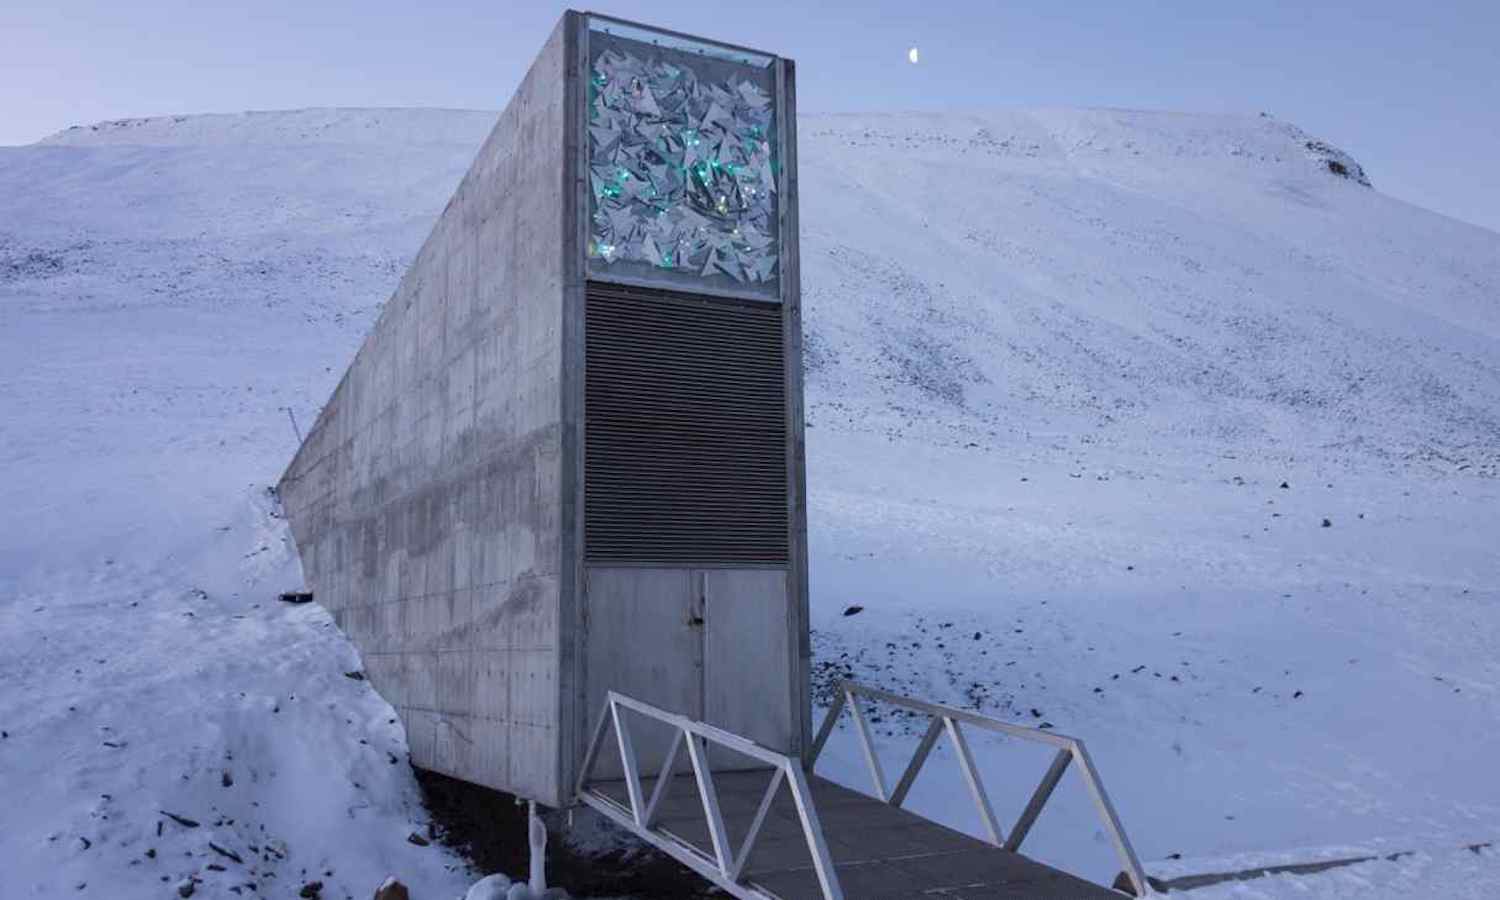 Svalbard Global Seed Vault在一个洞穴中储存了近100万种子，该山洞中的山洞中的山洞中，储存的种子可确保Genebank的种子消失或陷入废墟，那么世界上的许多生物多样性仍将继续帮助确保粮食安全。